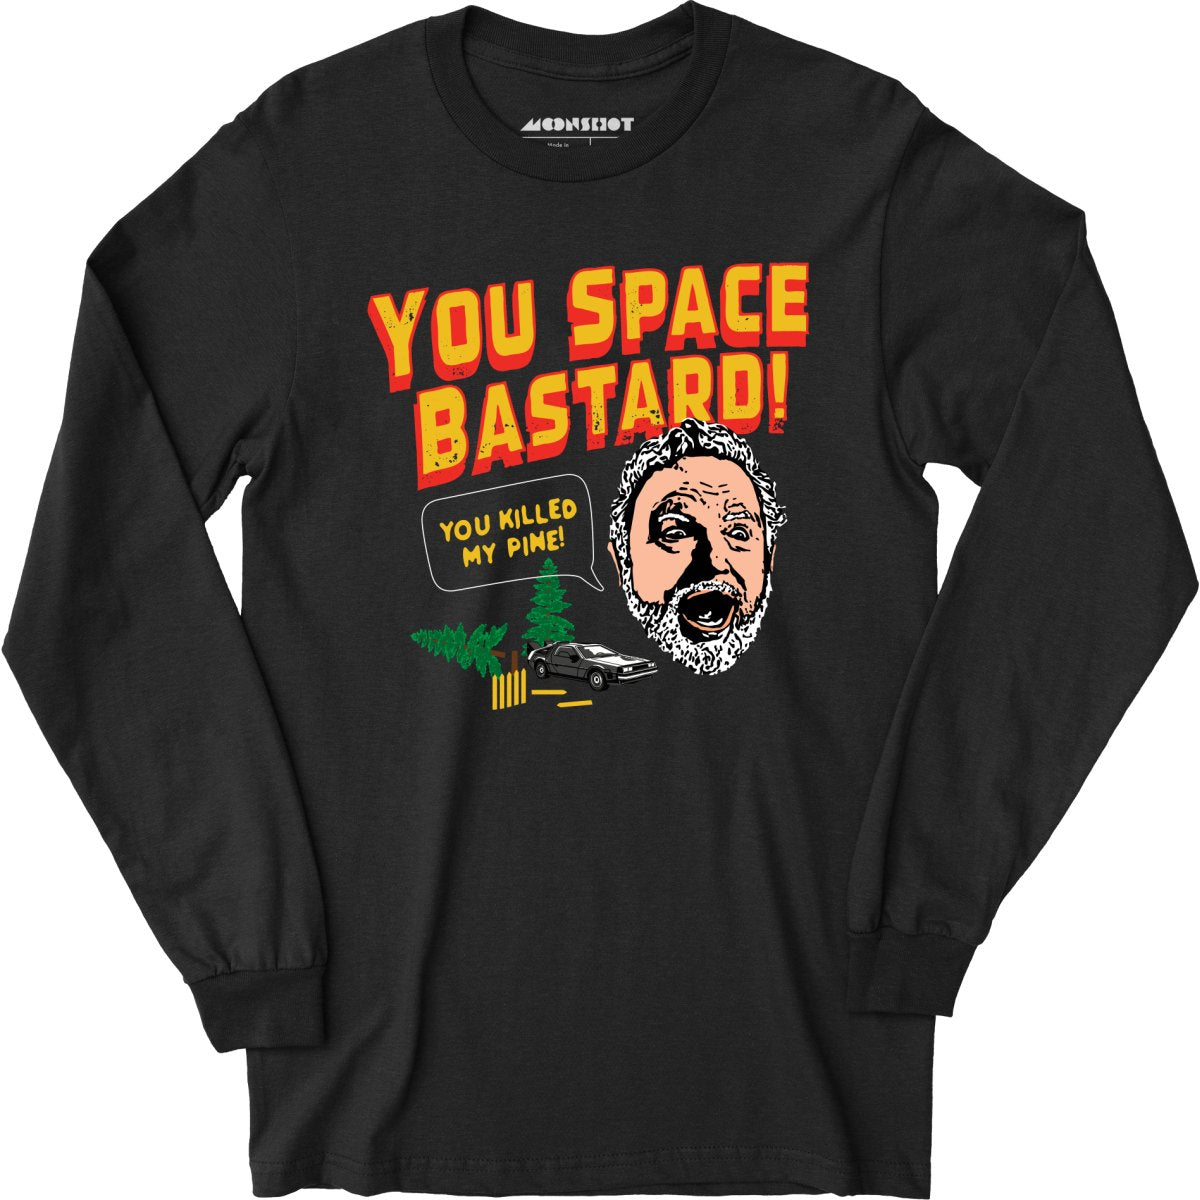 You Space Bastard! You Killed My Pine! - Long Sleeve T-Shirt